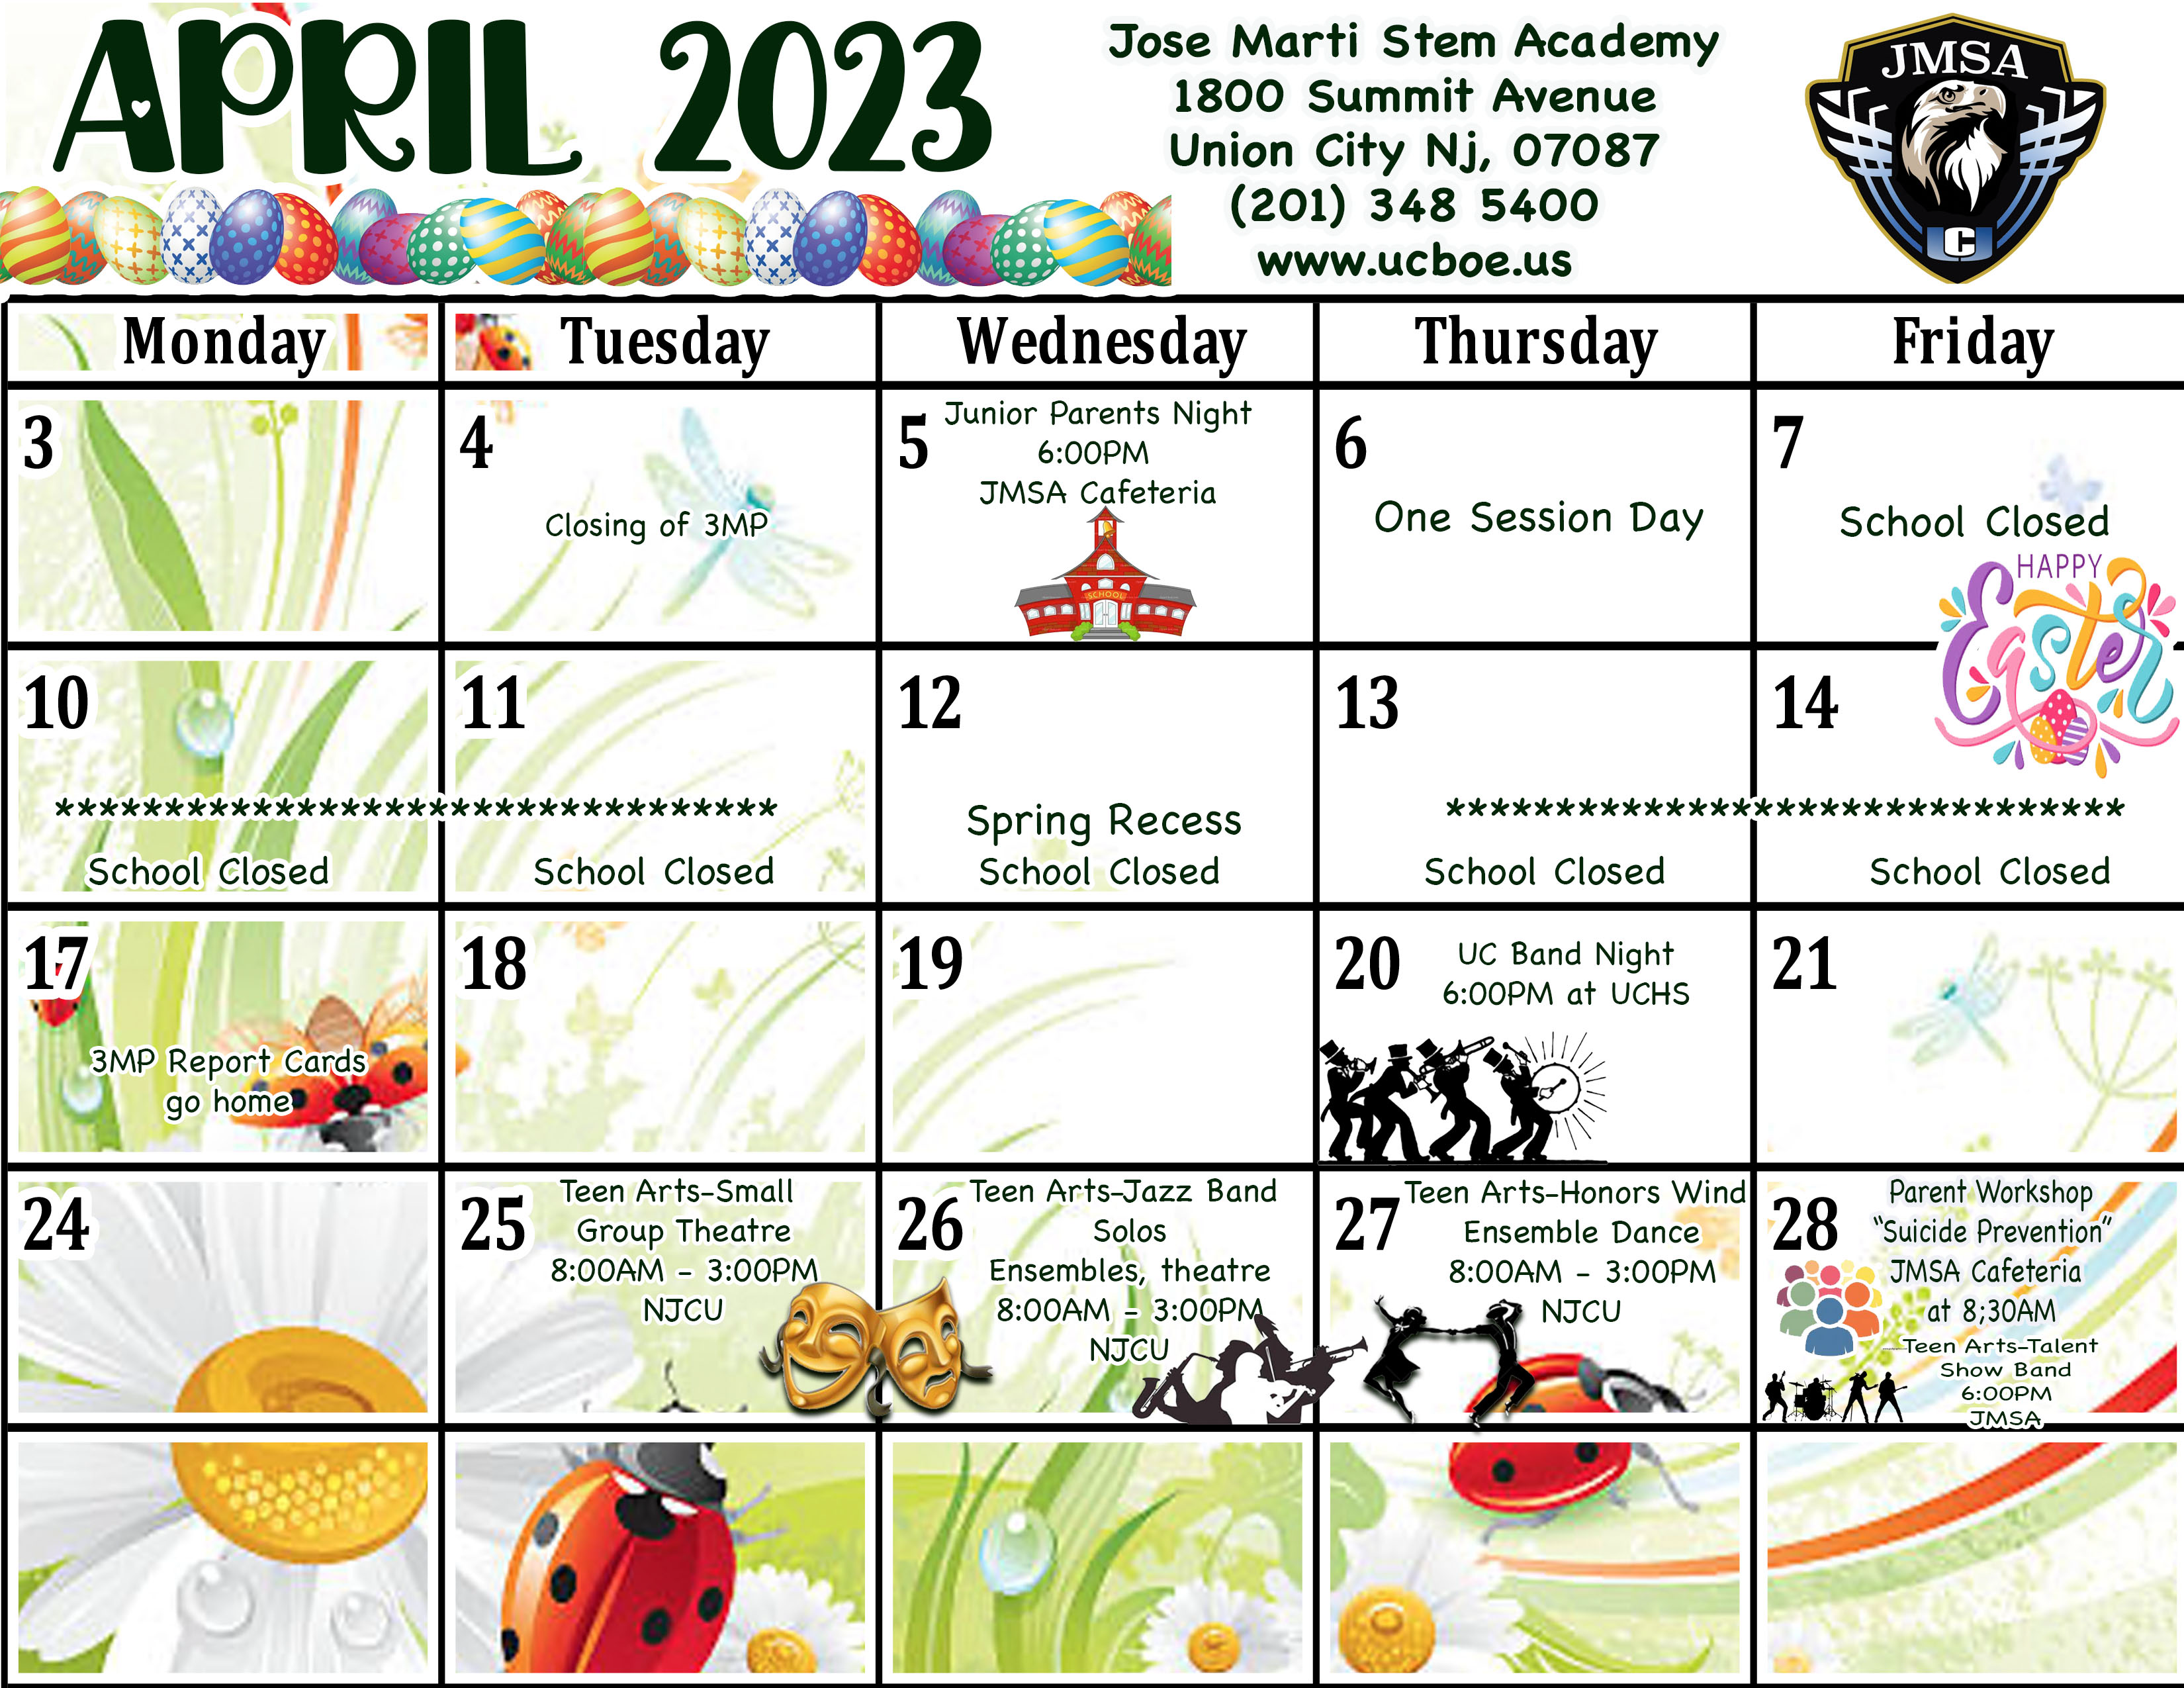 April 2023 Calendar-Jose Martí STEM Academy 